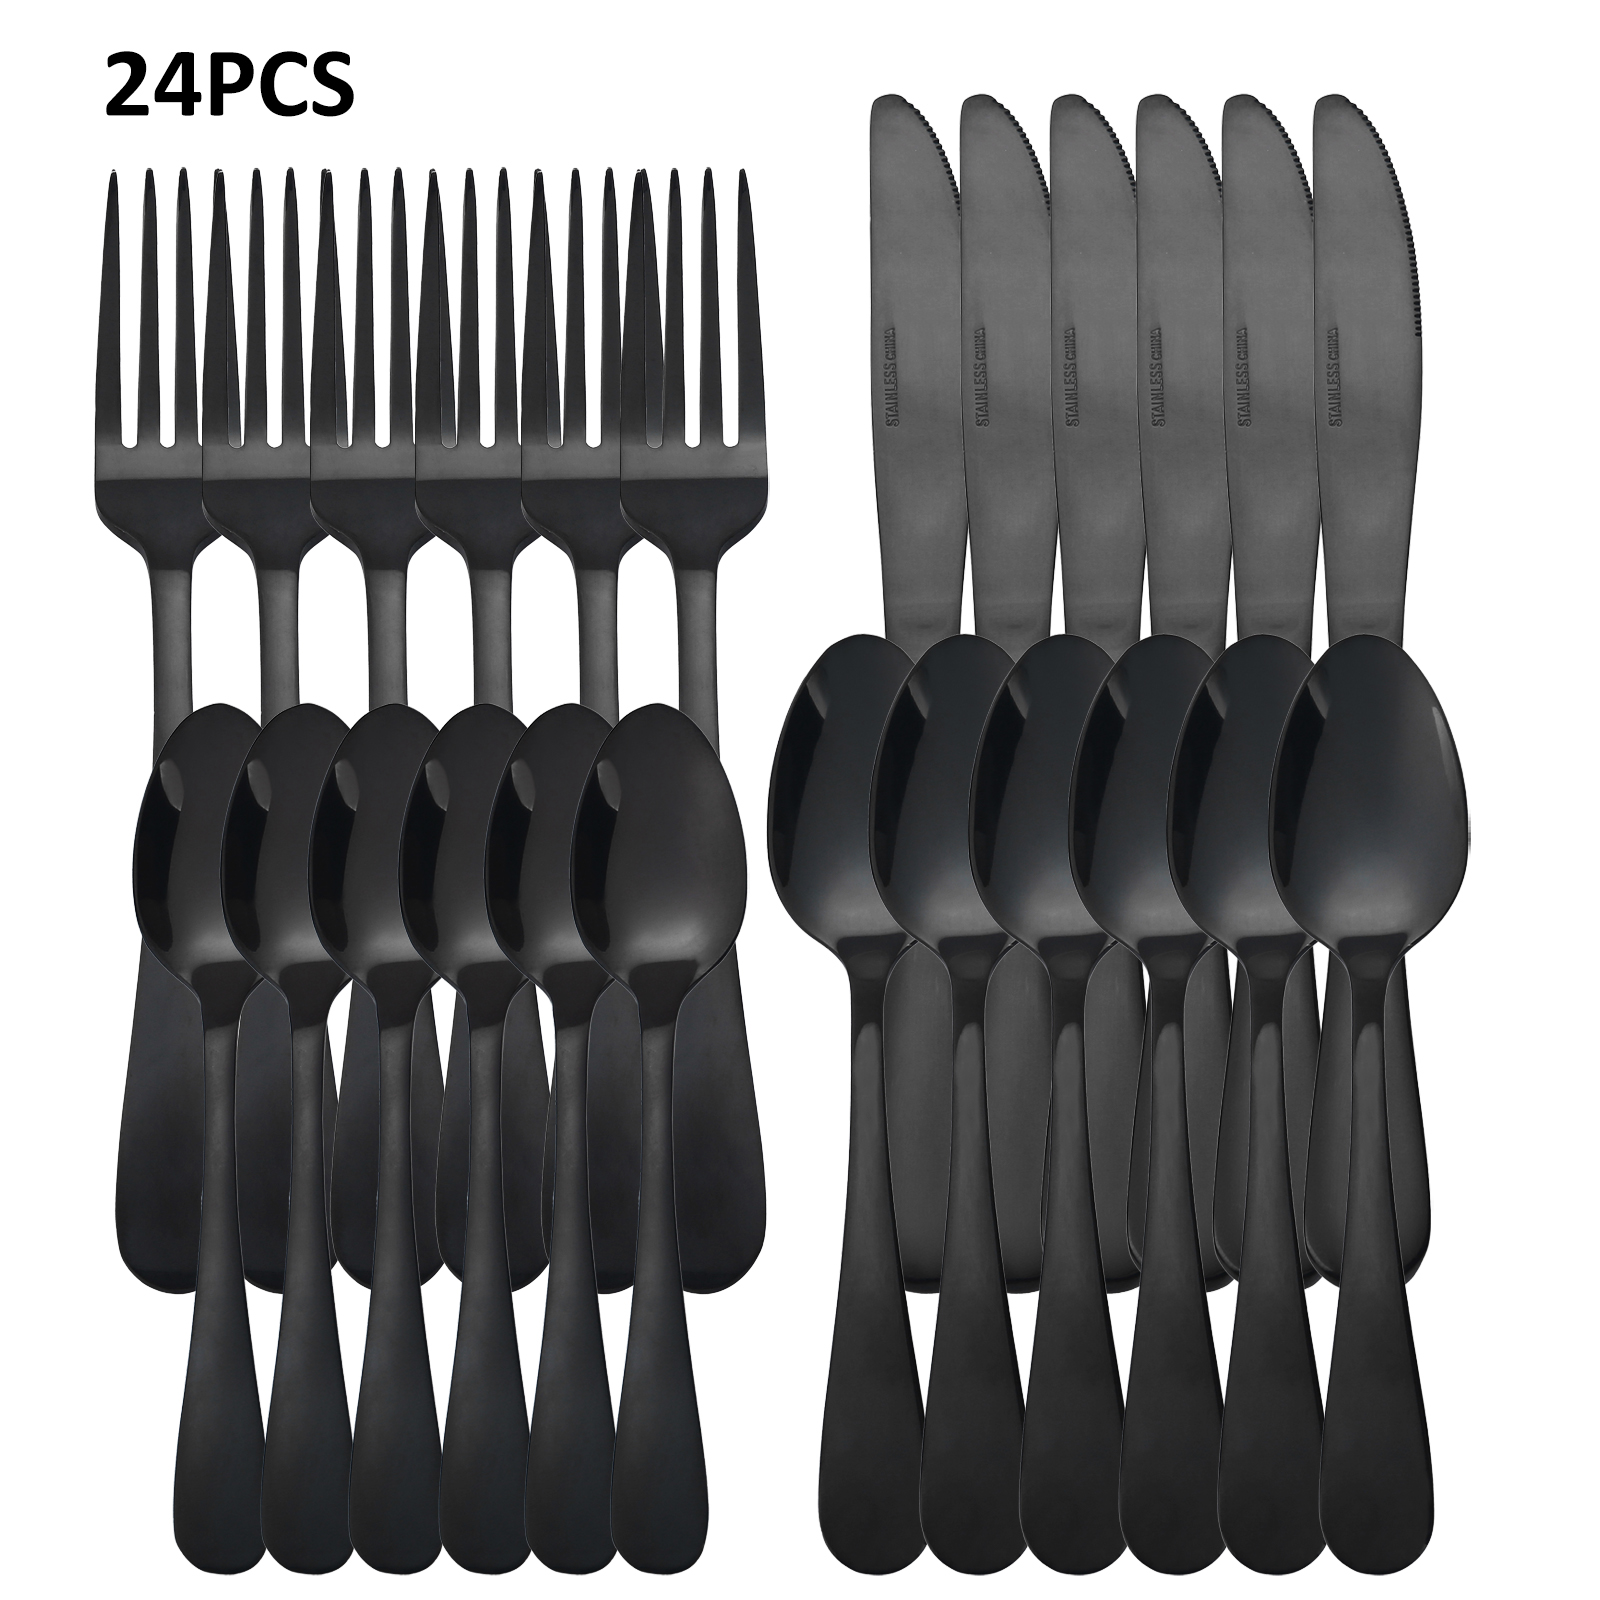 

24pcs Stainless Steel Flatware Set For 6 People - Silverware Set, Tableware Set Includes Knife Fork Spoon, Cutlery Set Ideal For Restaurants, Homes, Parties, Weddings